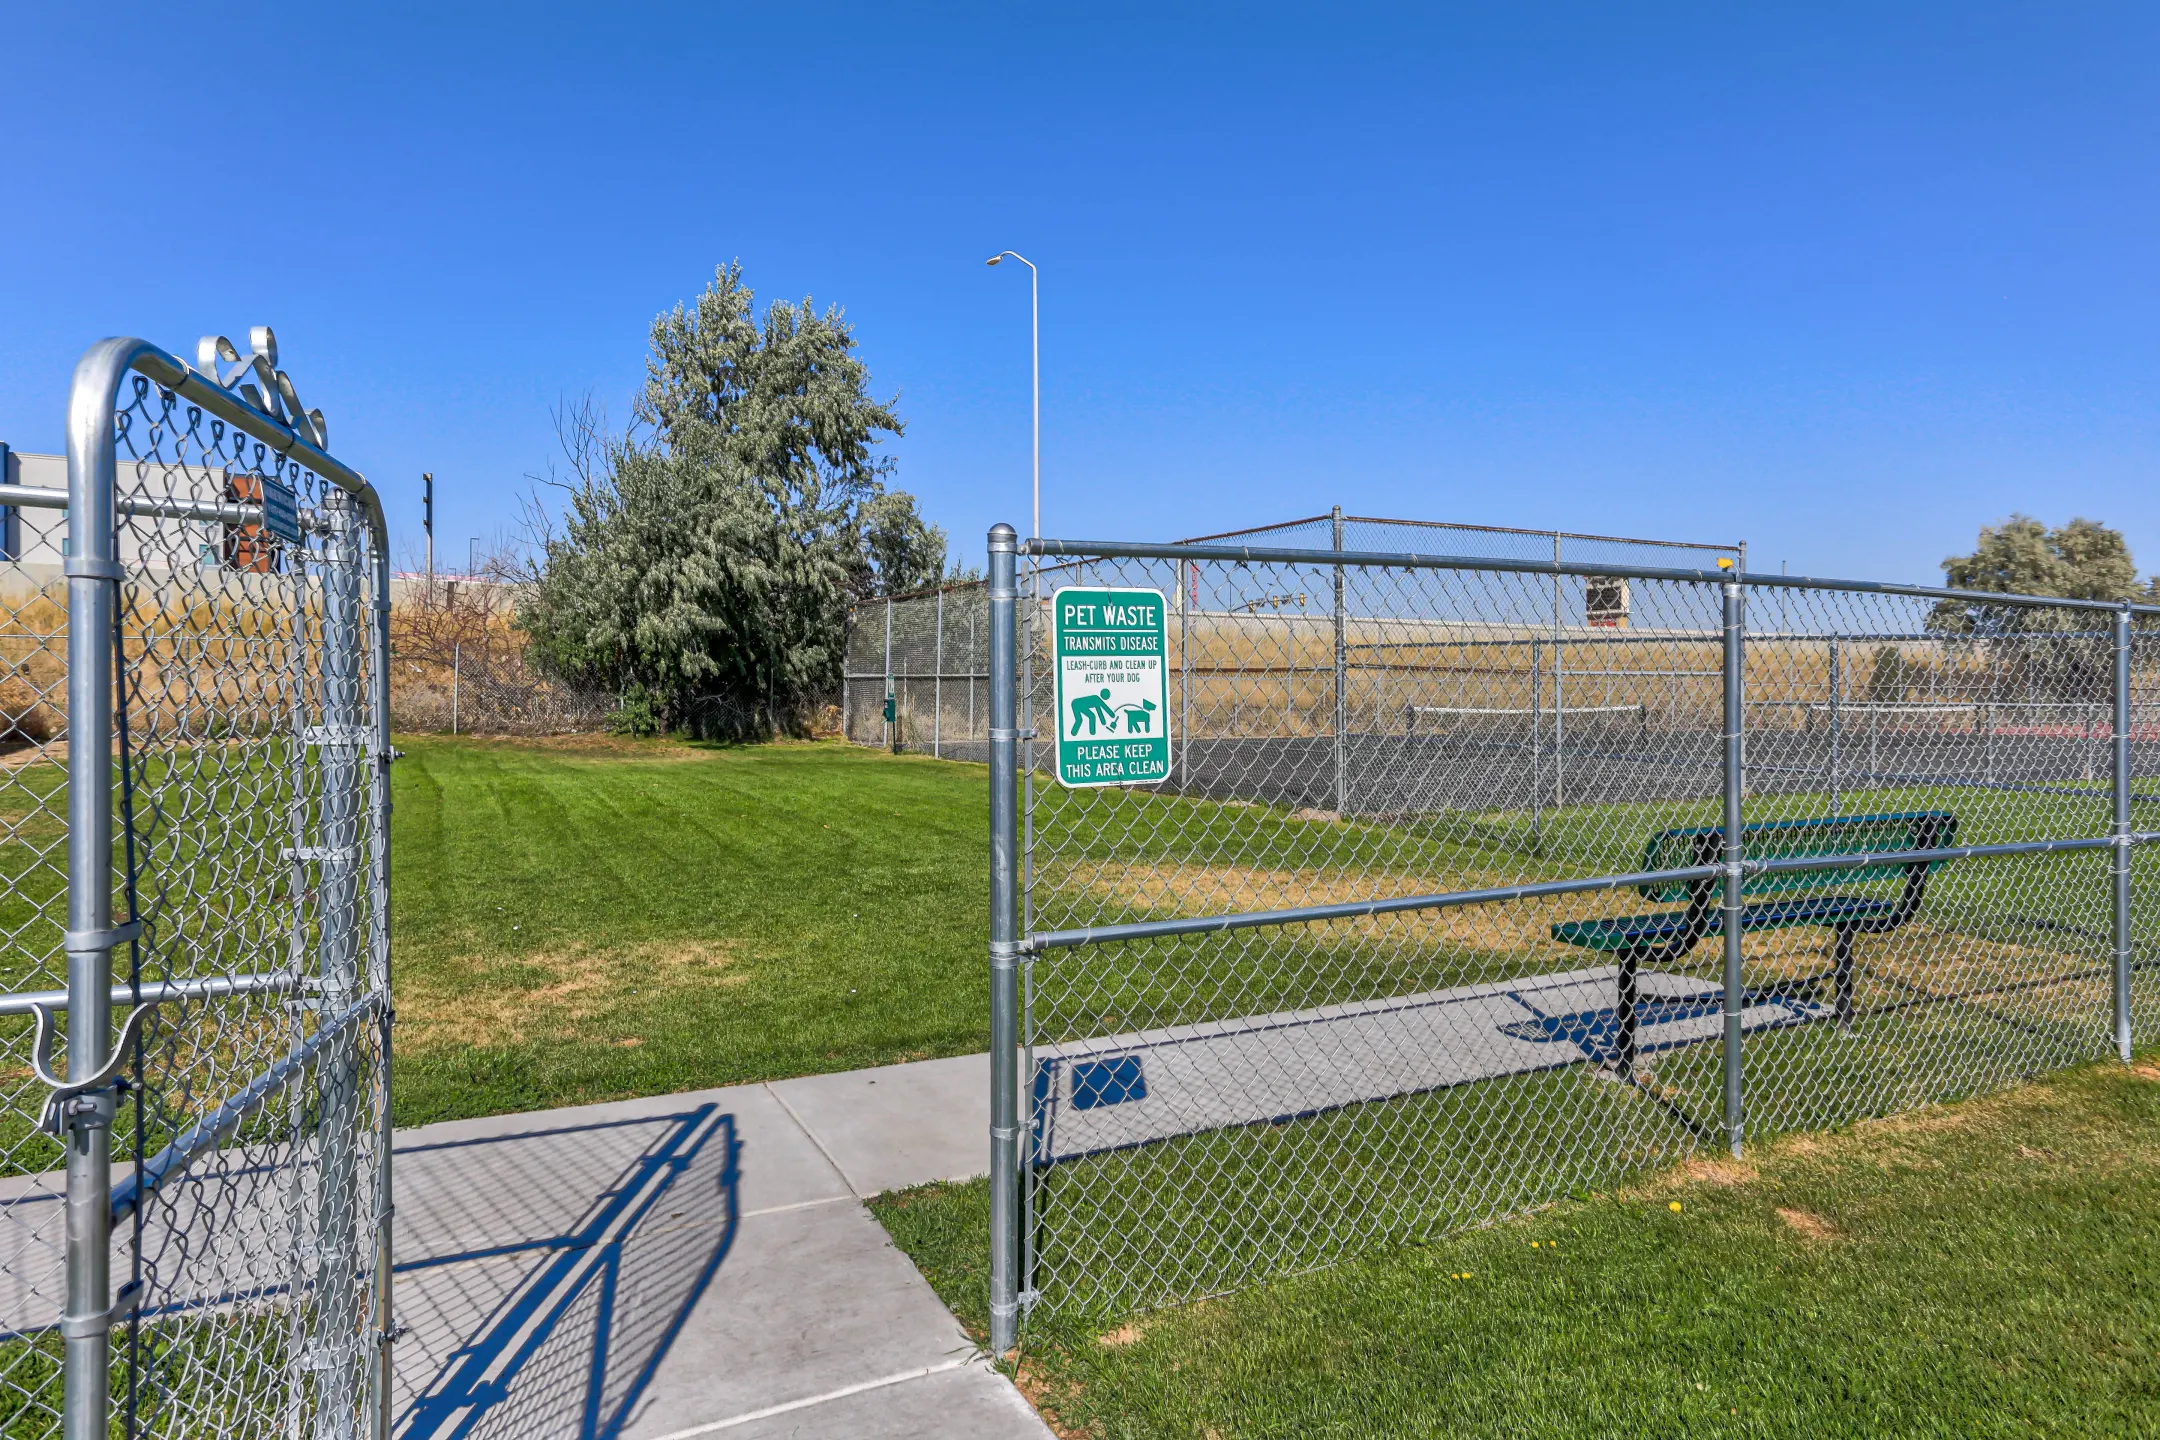 Community Signage - Valley Park - Salt Lake City, UT